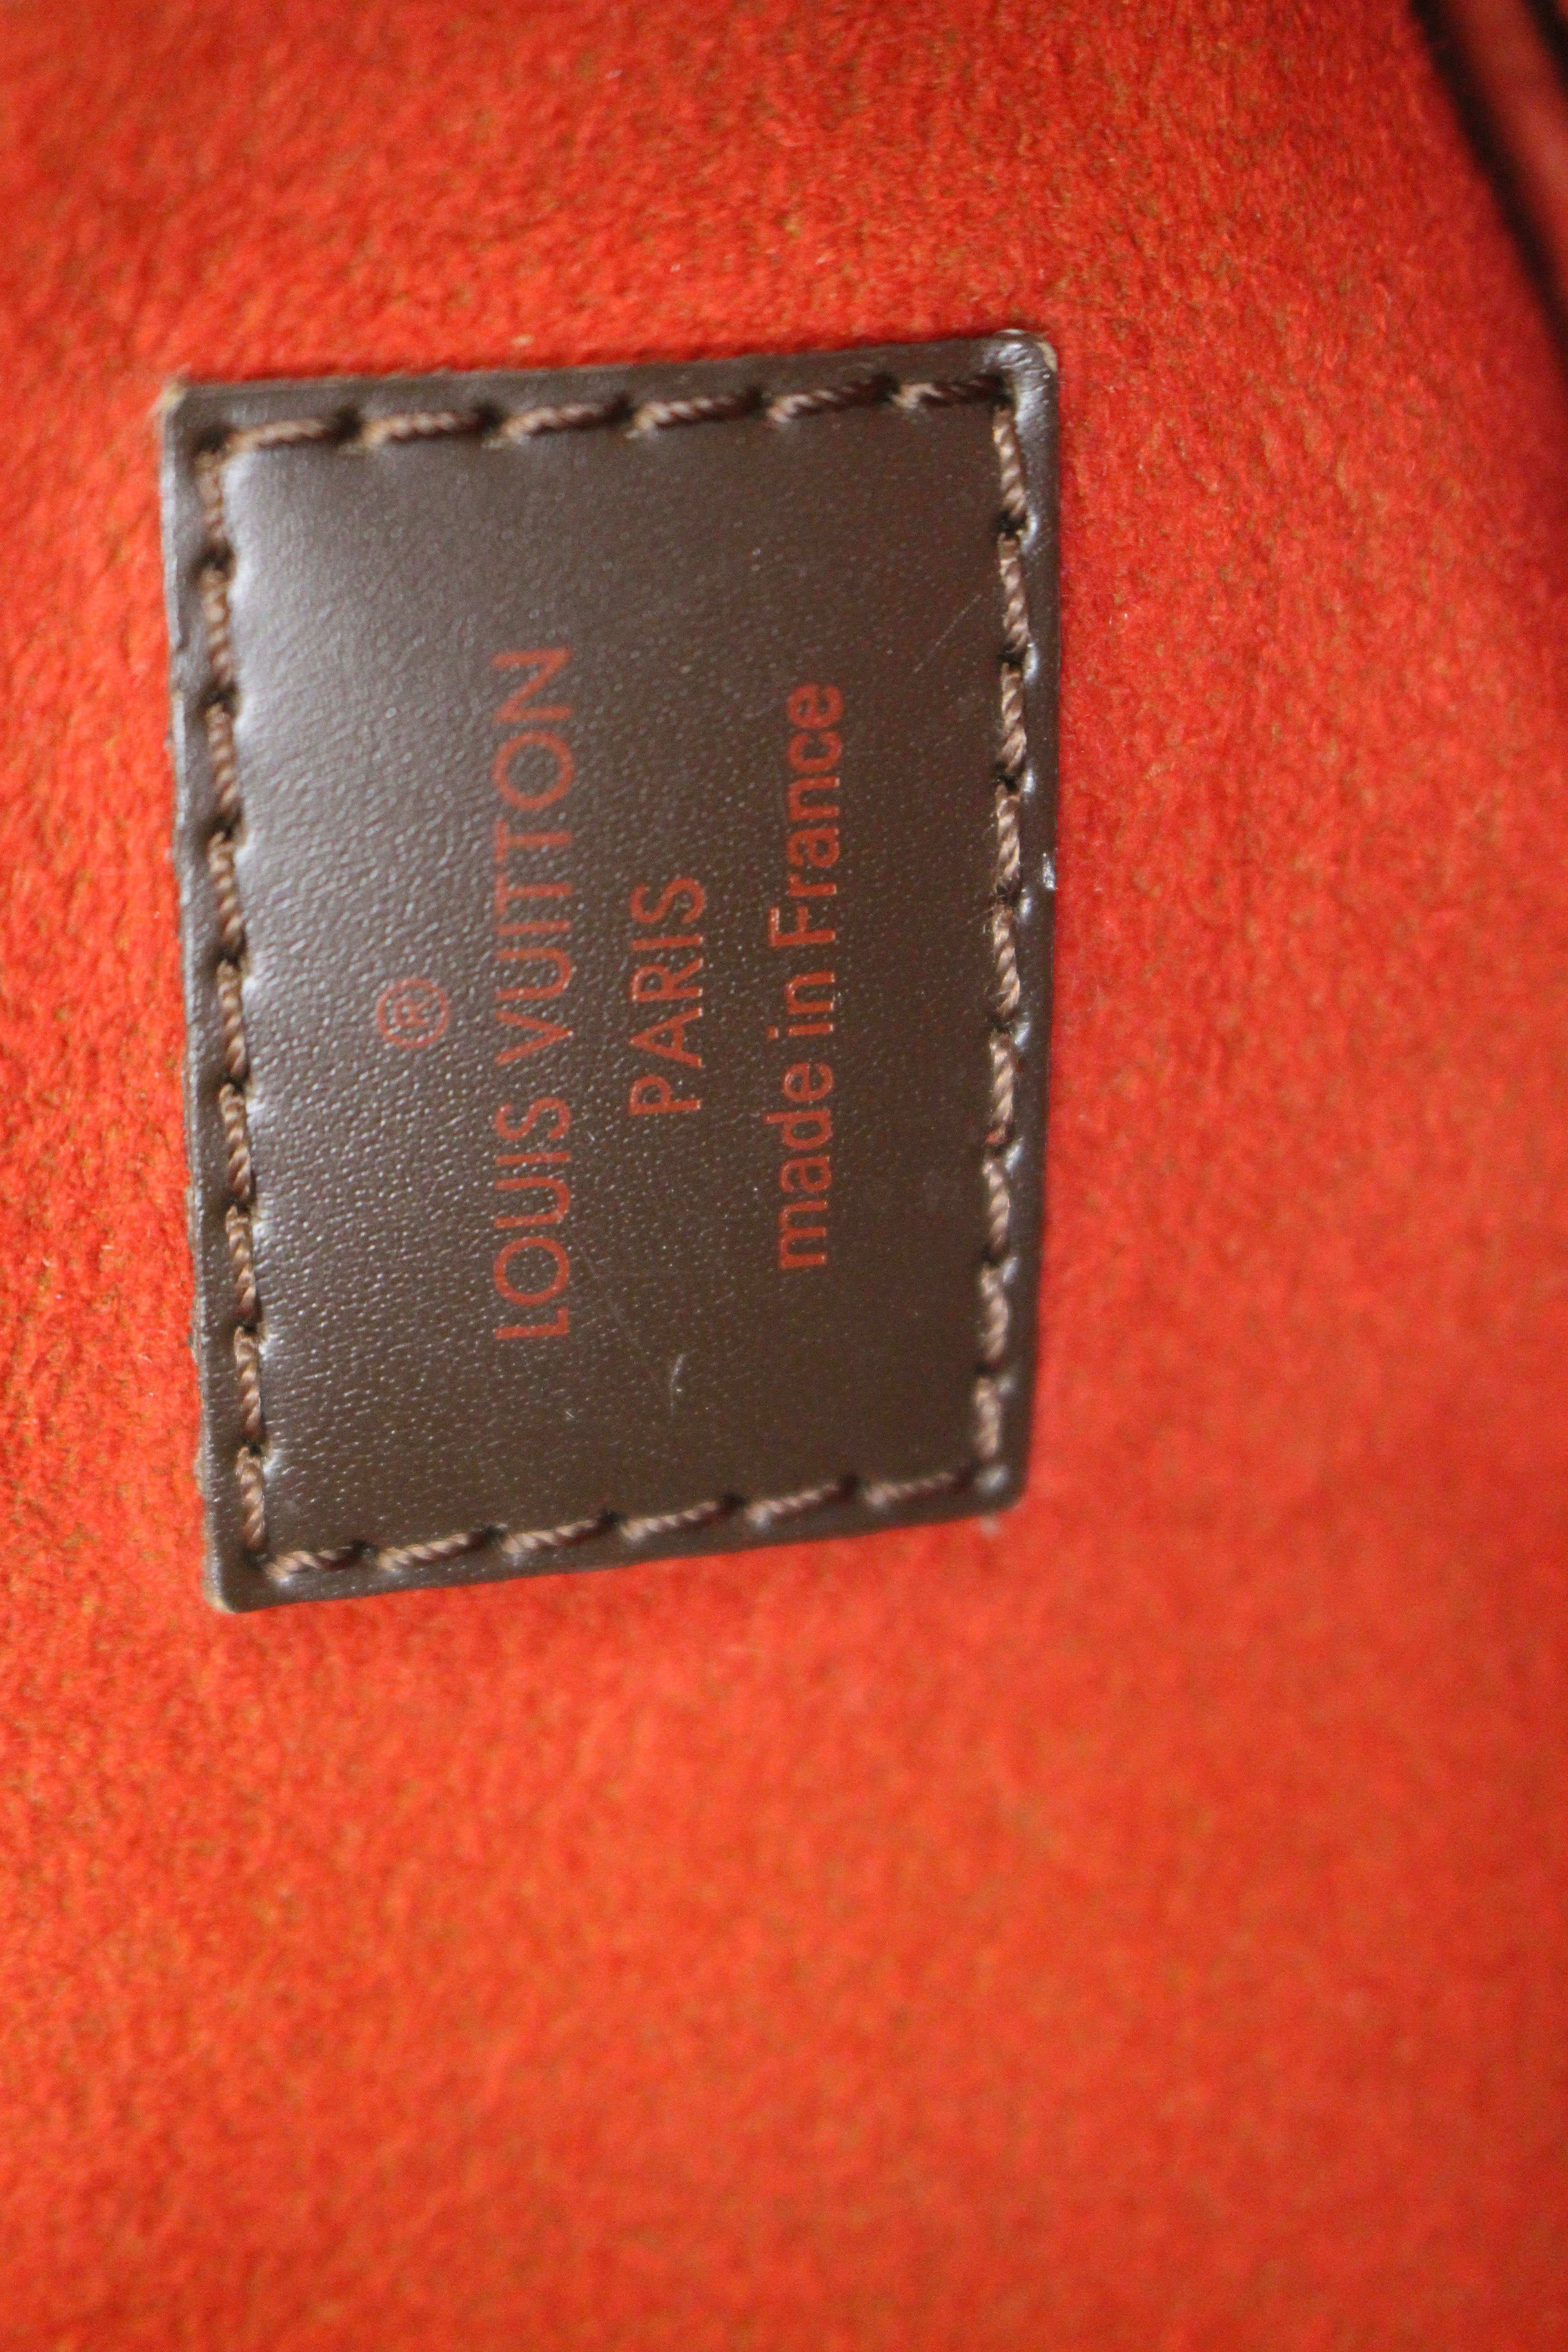 Louis Vuitton 2011 pre-owned Damier Ebène Evora MM two-way Bag - Farfetch